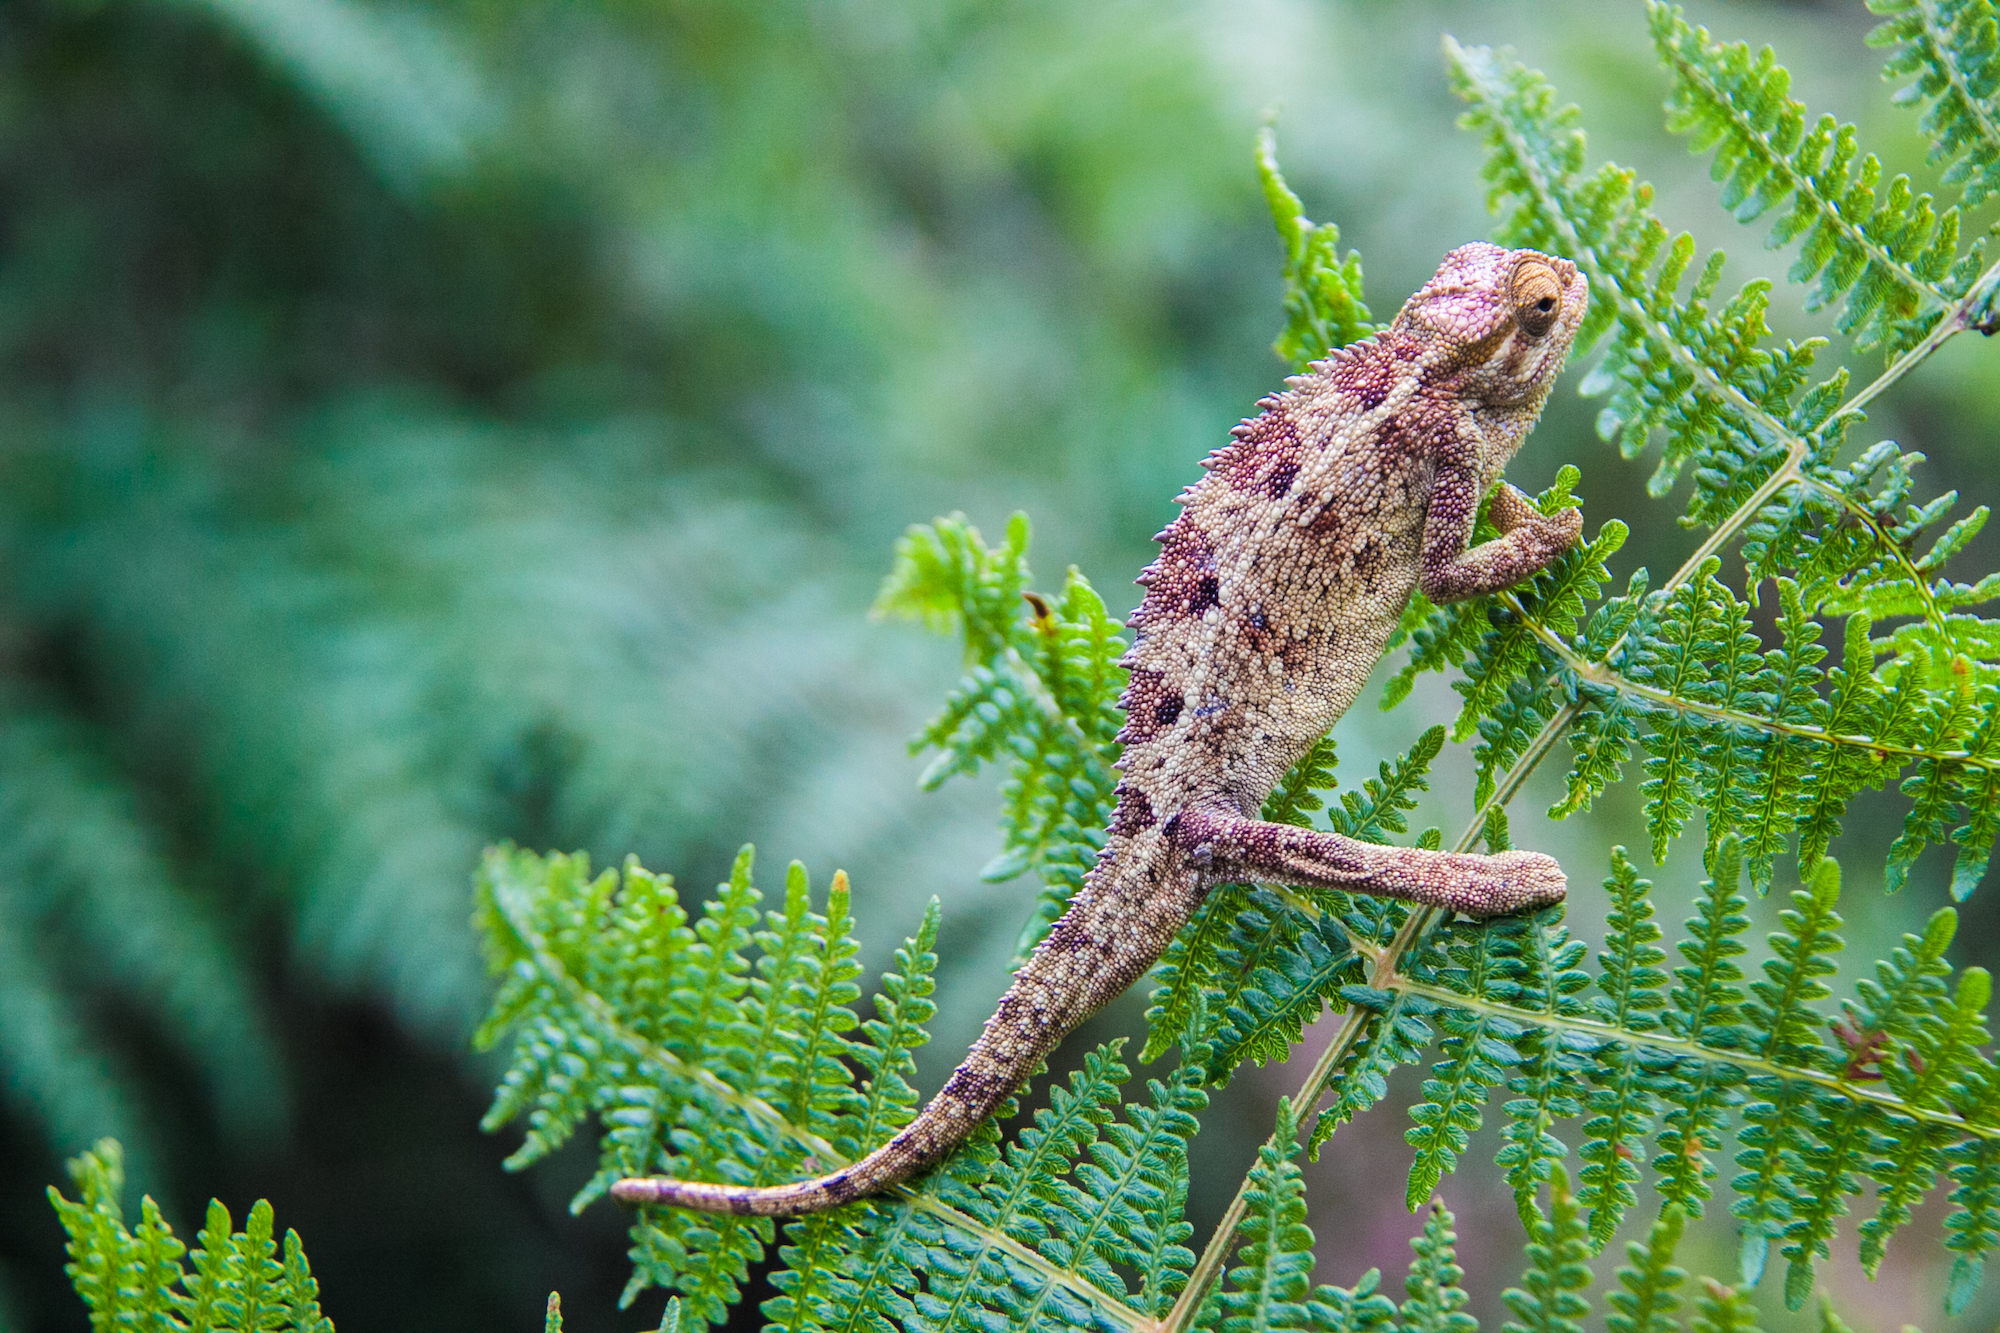 Brown chameleon on a branch